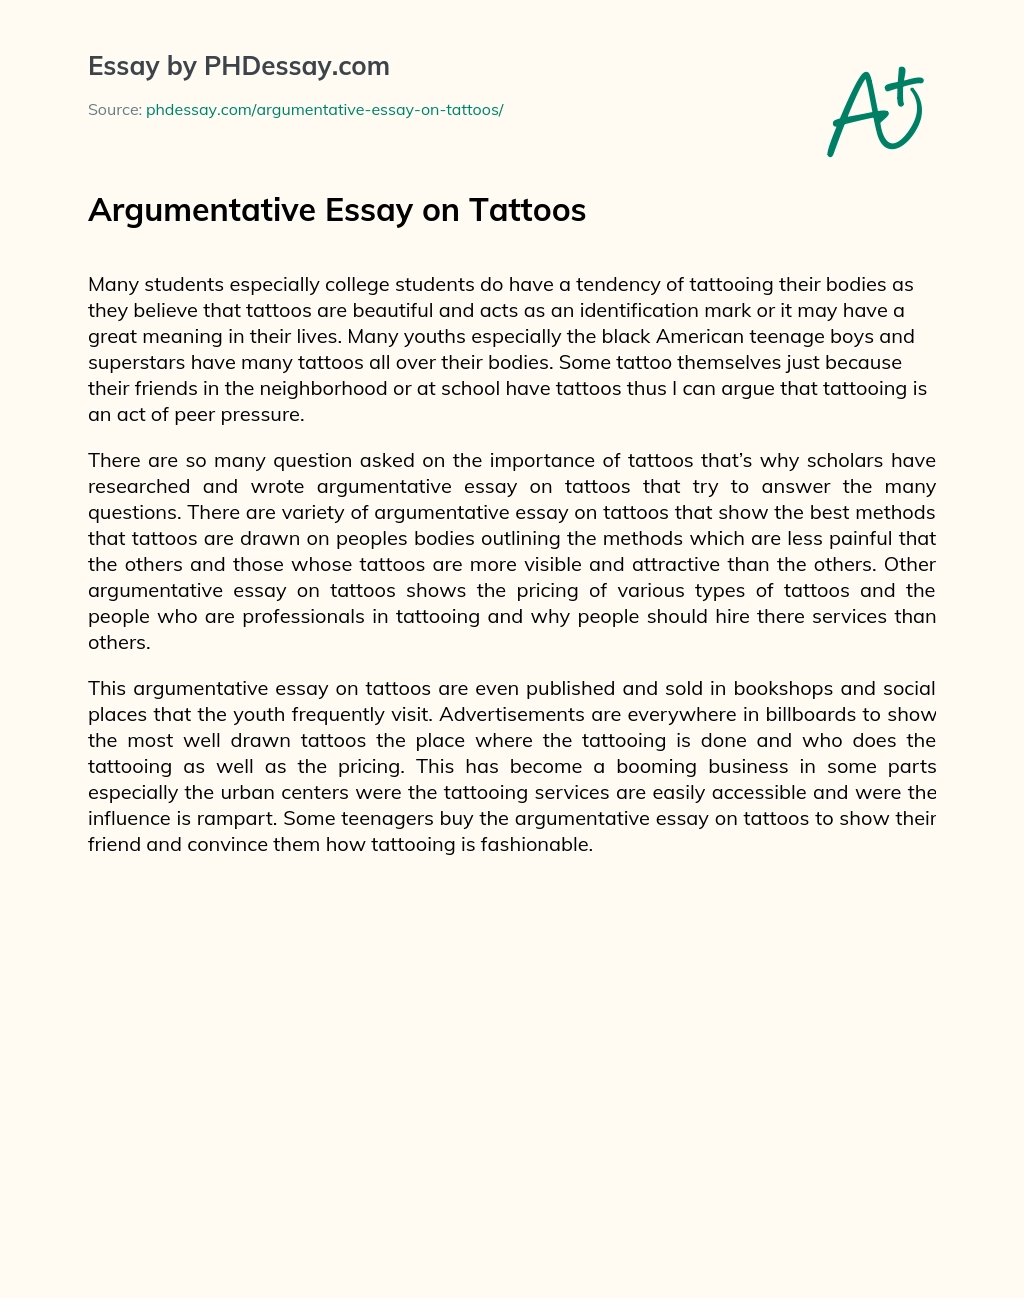 Argumentative Essay on Tattoos essay